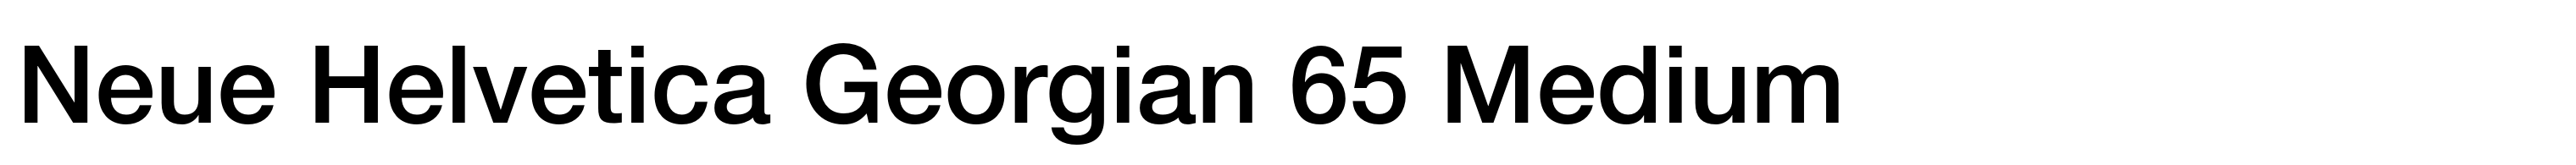 Neue Helvetica Georgian 65 Medium